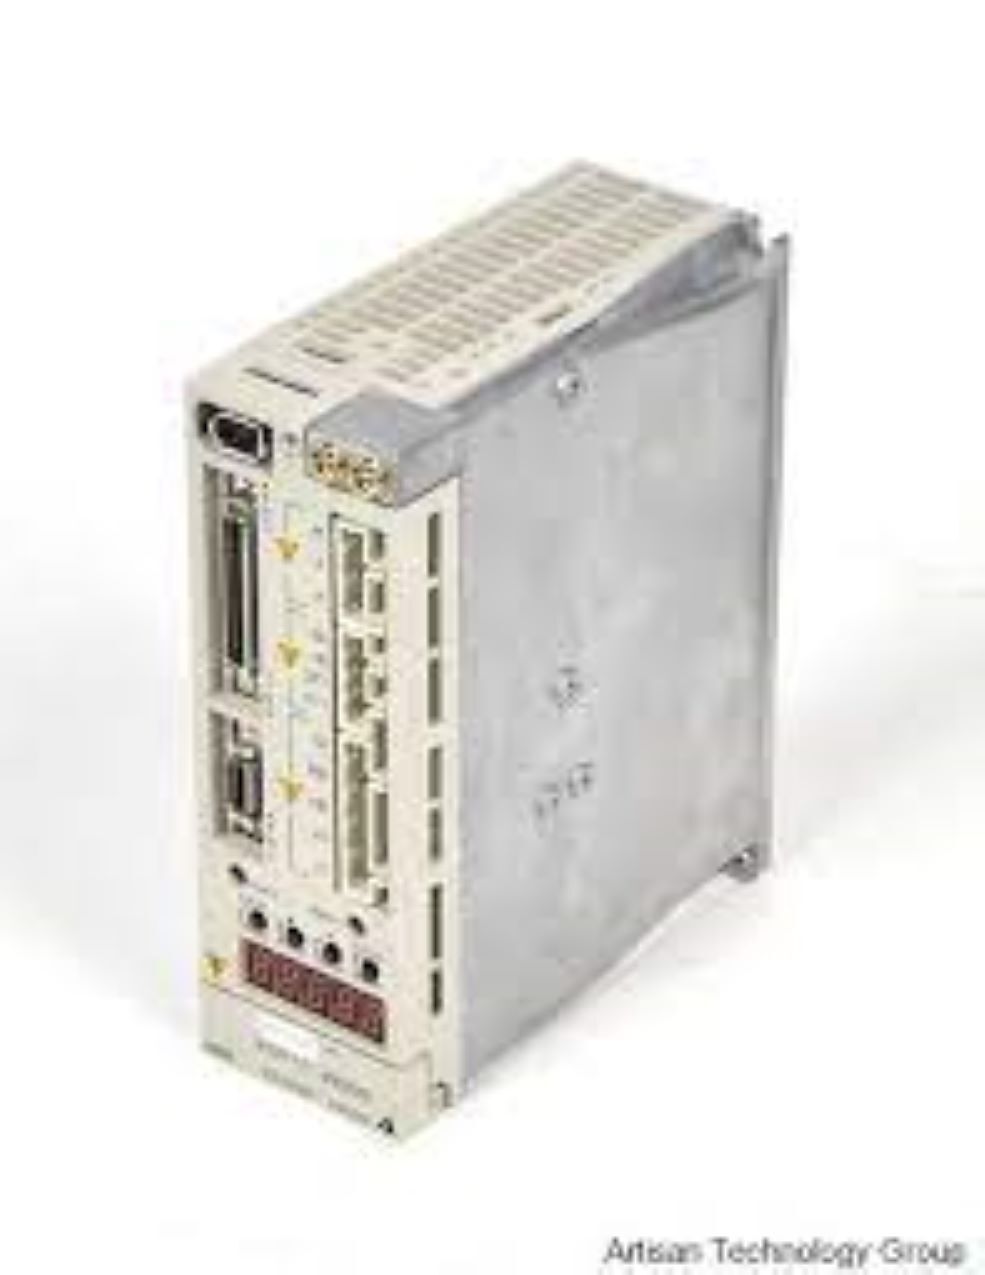 SGDM-01ADA-siemens programmable logic controller